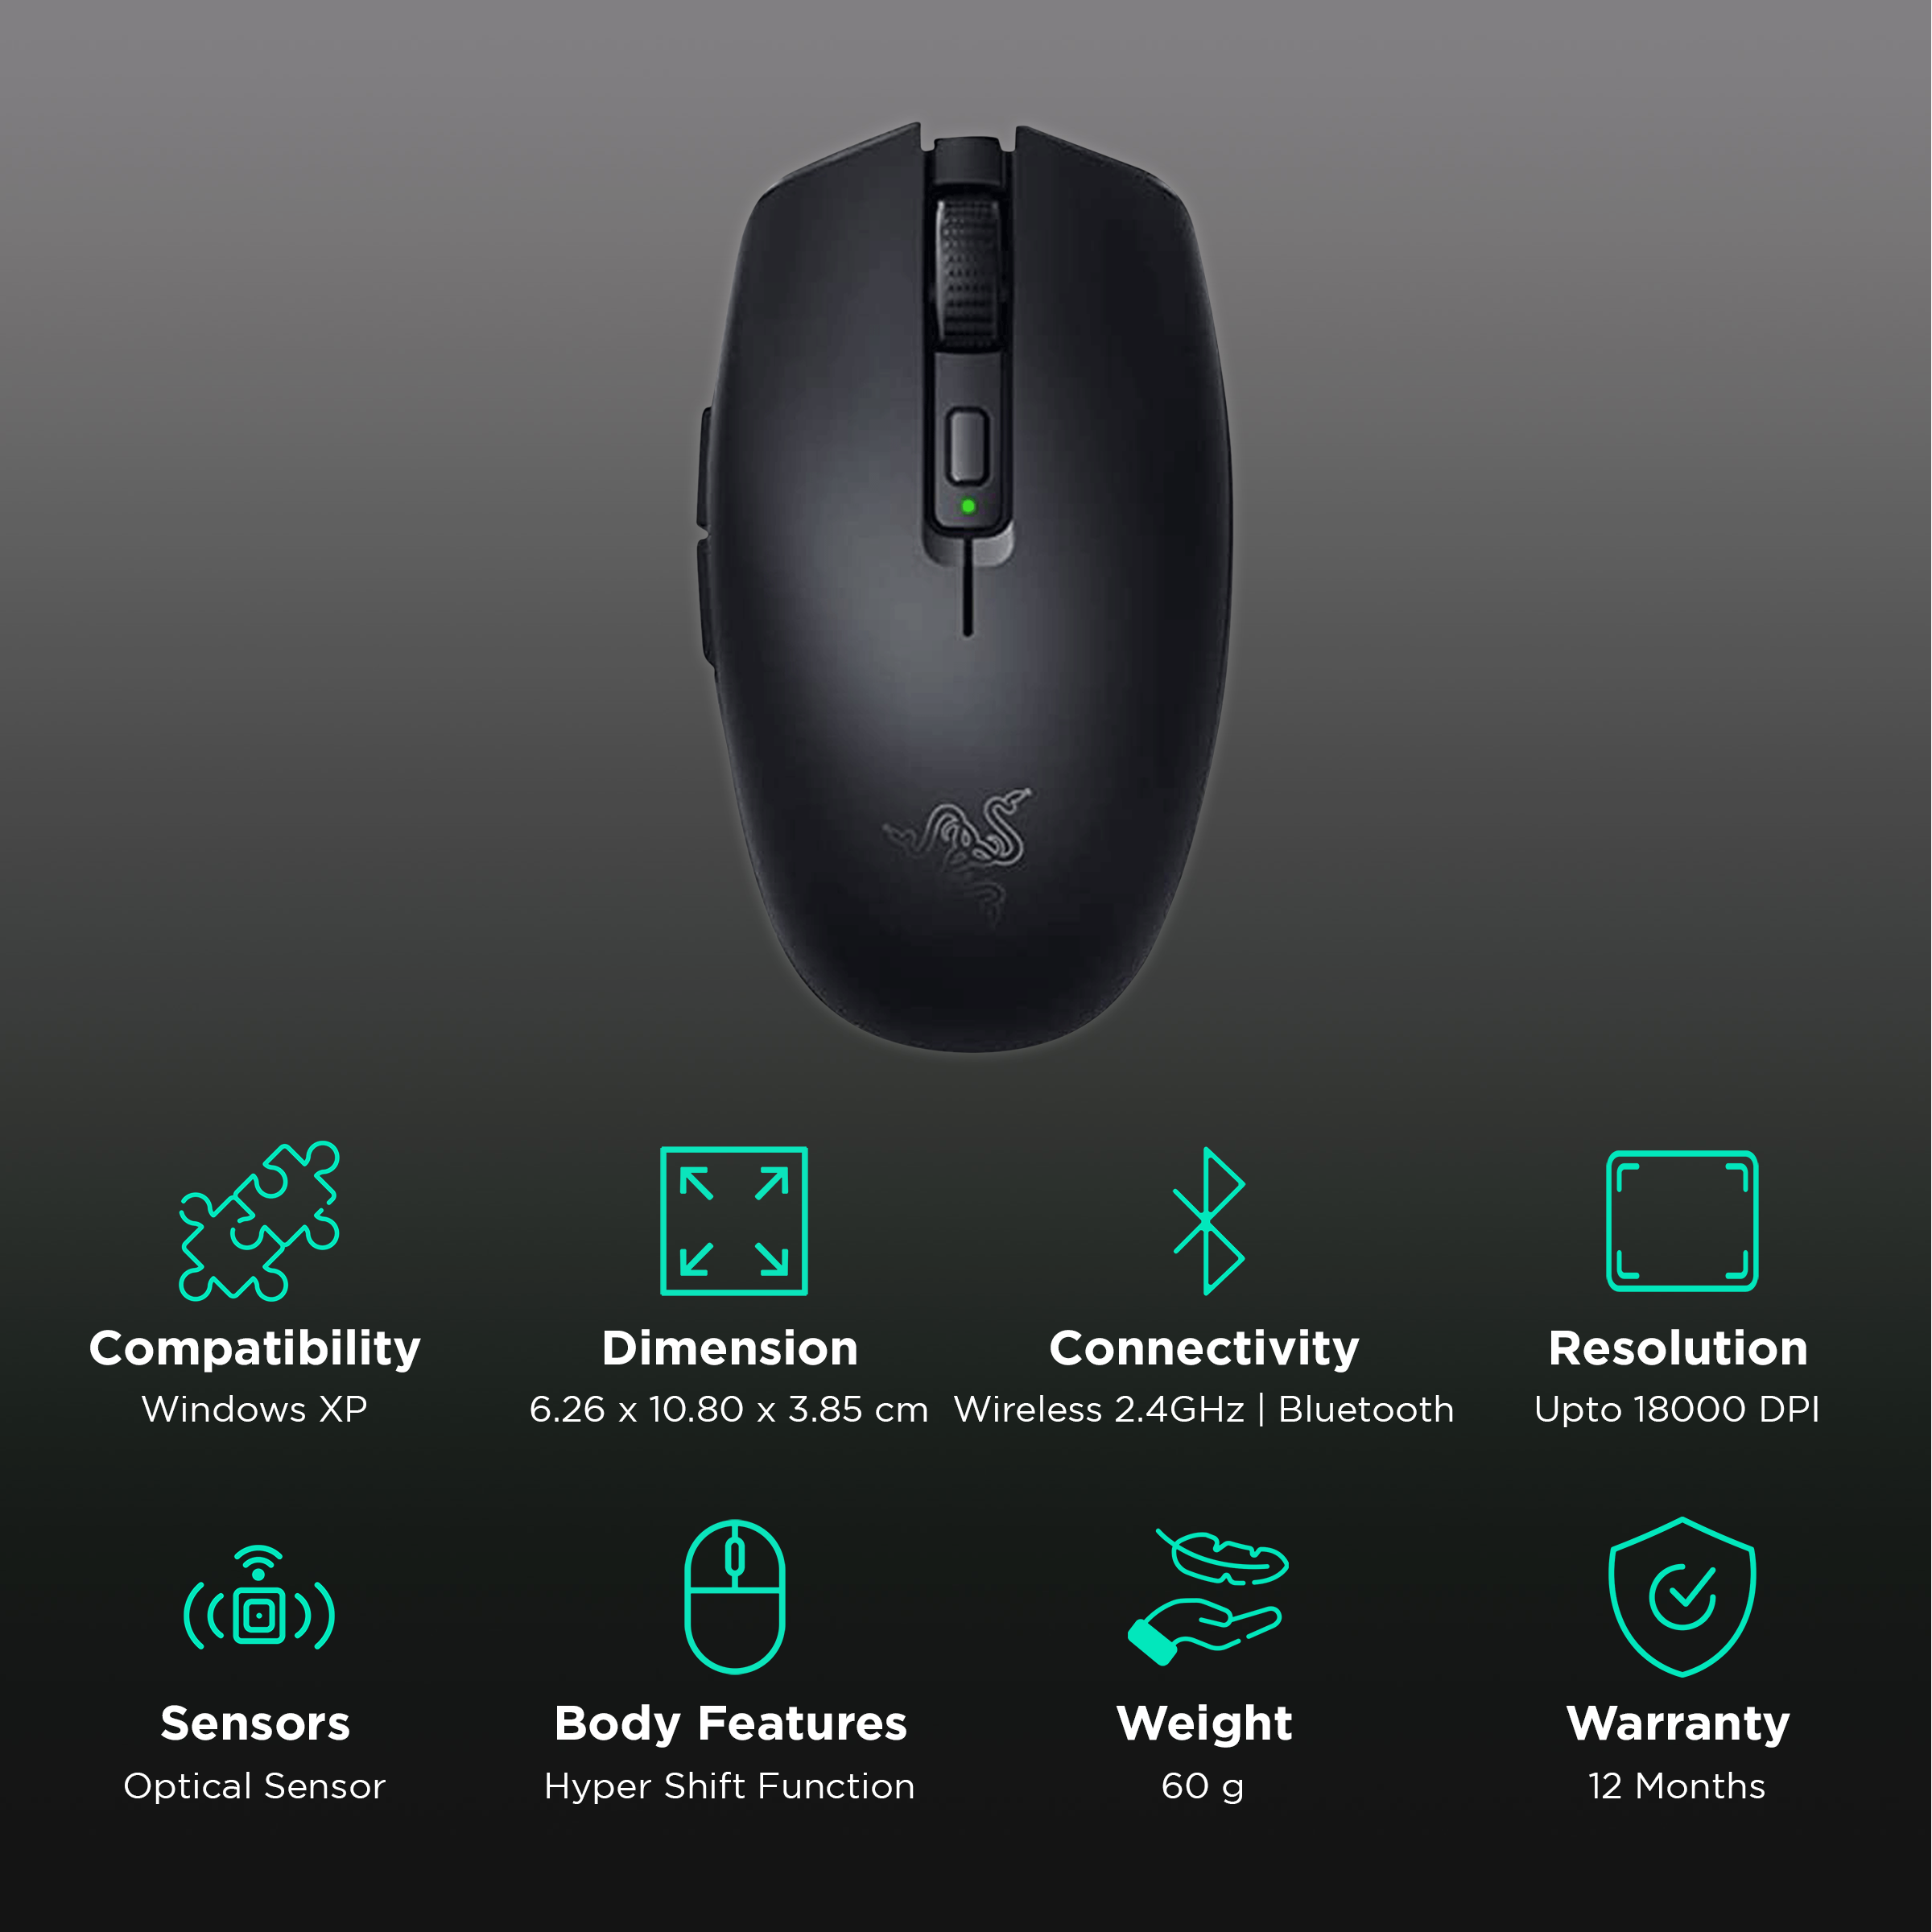 Razer Orochi V2 Ultra-Lightweight Wireless Gaming Mouse (RZ01-03730100-R3A1)